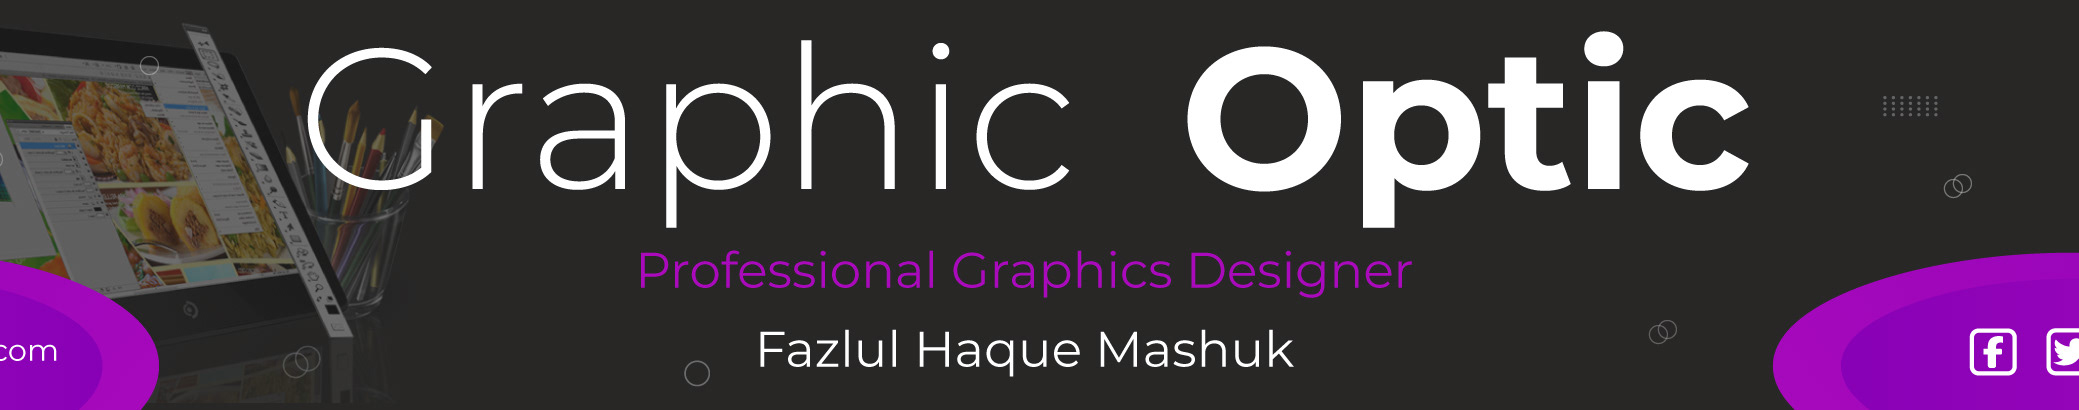 Fazlul Haque Mashuk's profile banner